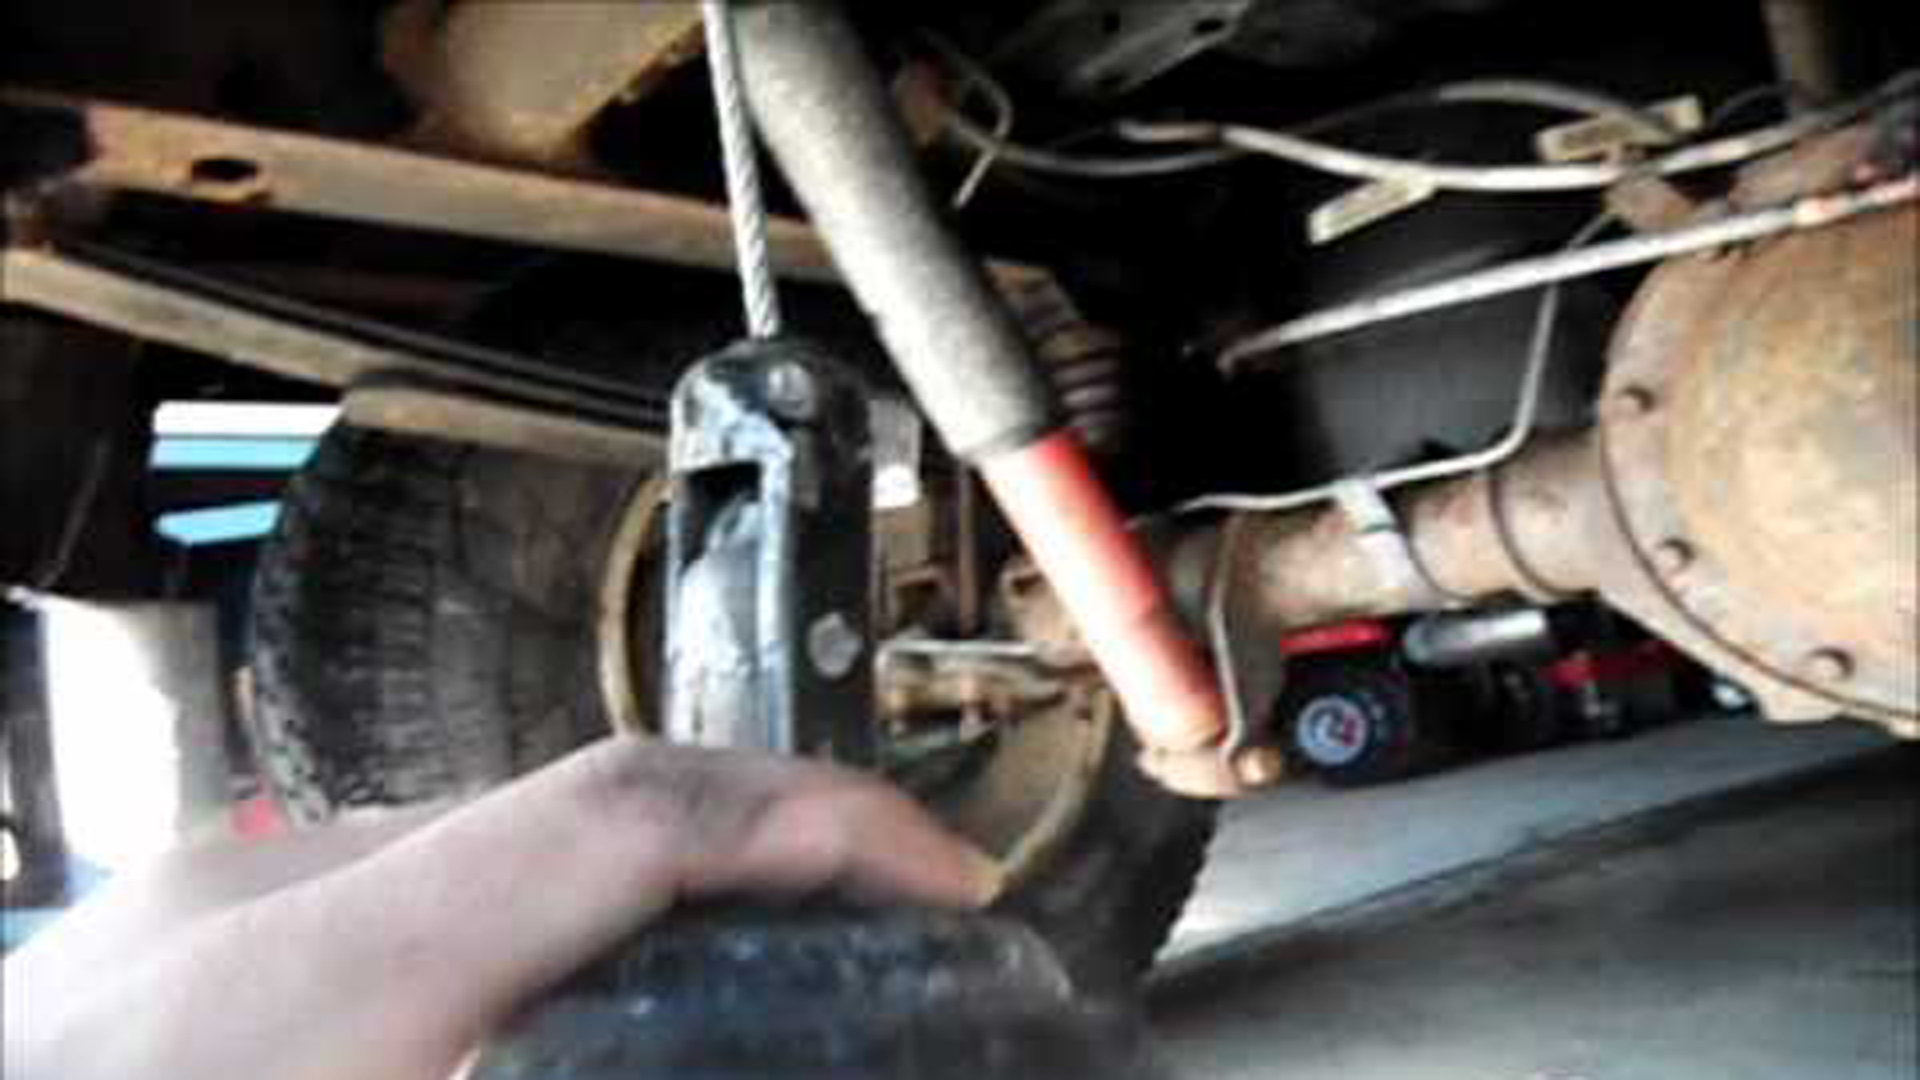 Chevrolet Silverado 1999-2006: How to Remove Spare Tire | Chevroletforum